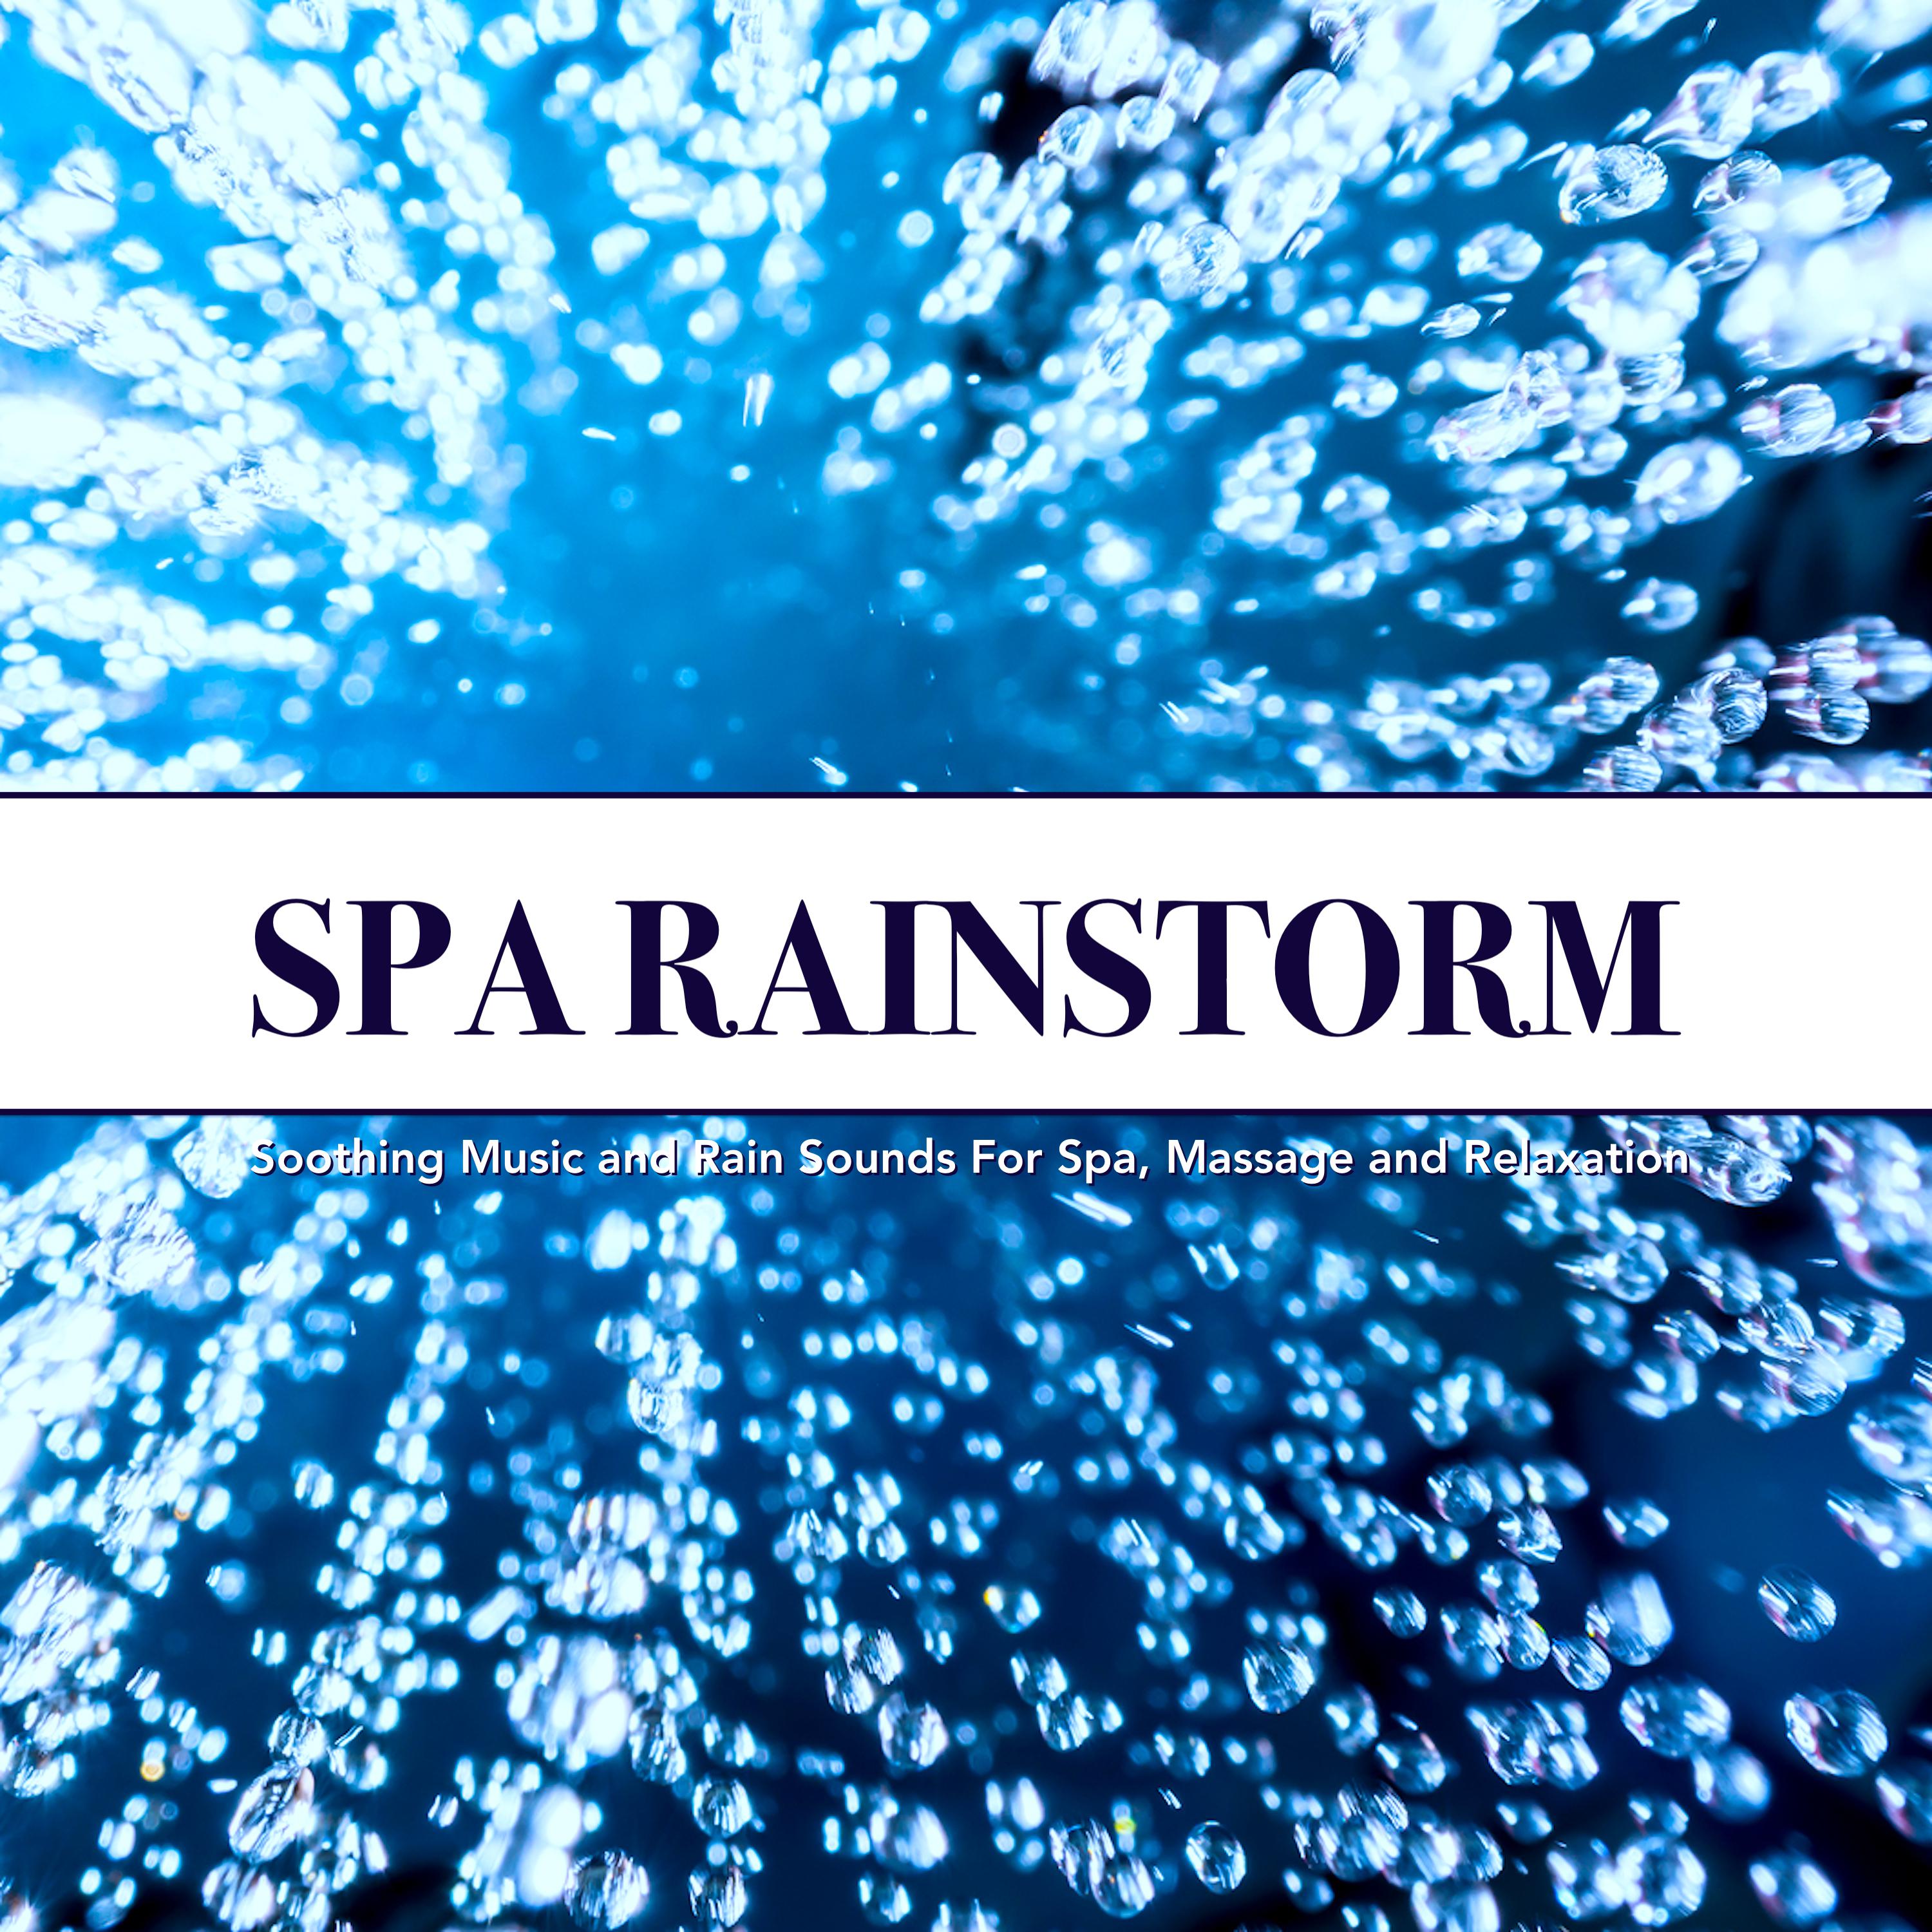 Spa Rainstorm